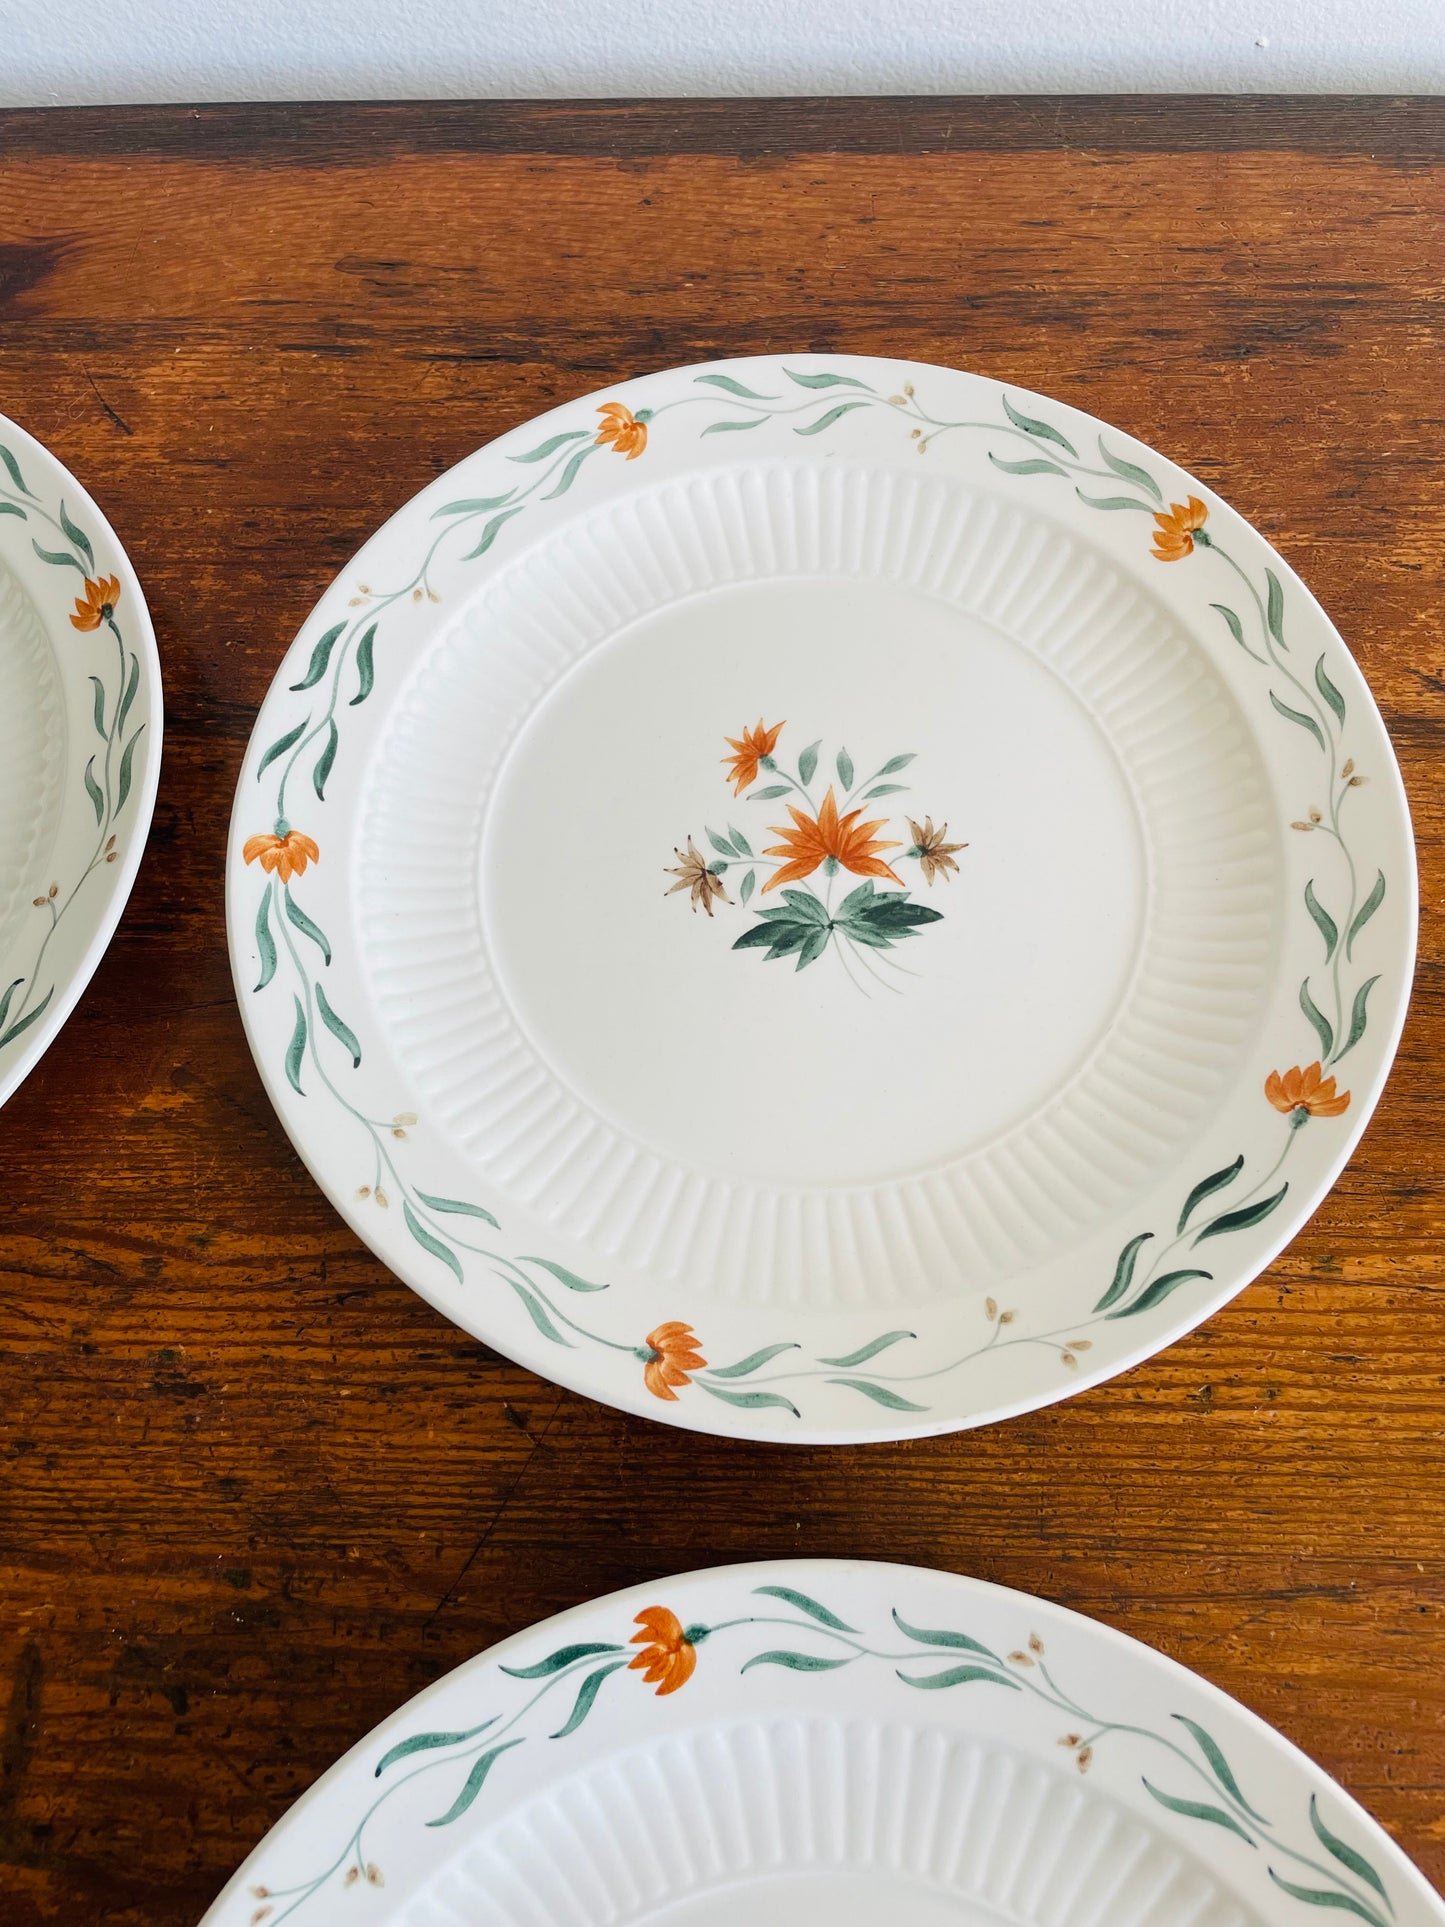 Adams Real English Ironstone Micratex Side Dish 8" Plates - Bittersweet Flower Pattern - Set of 4